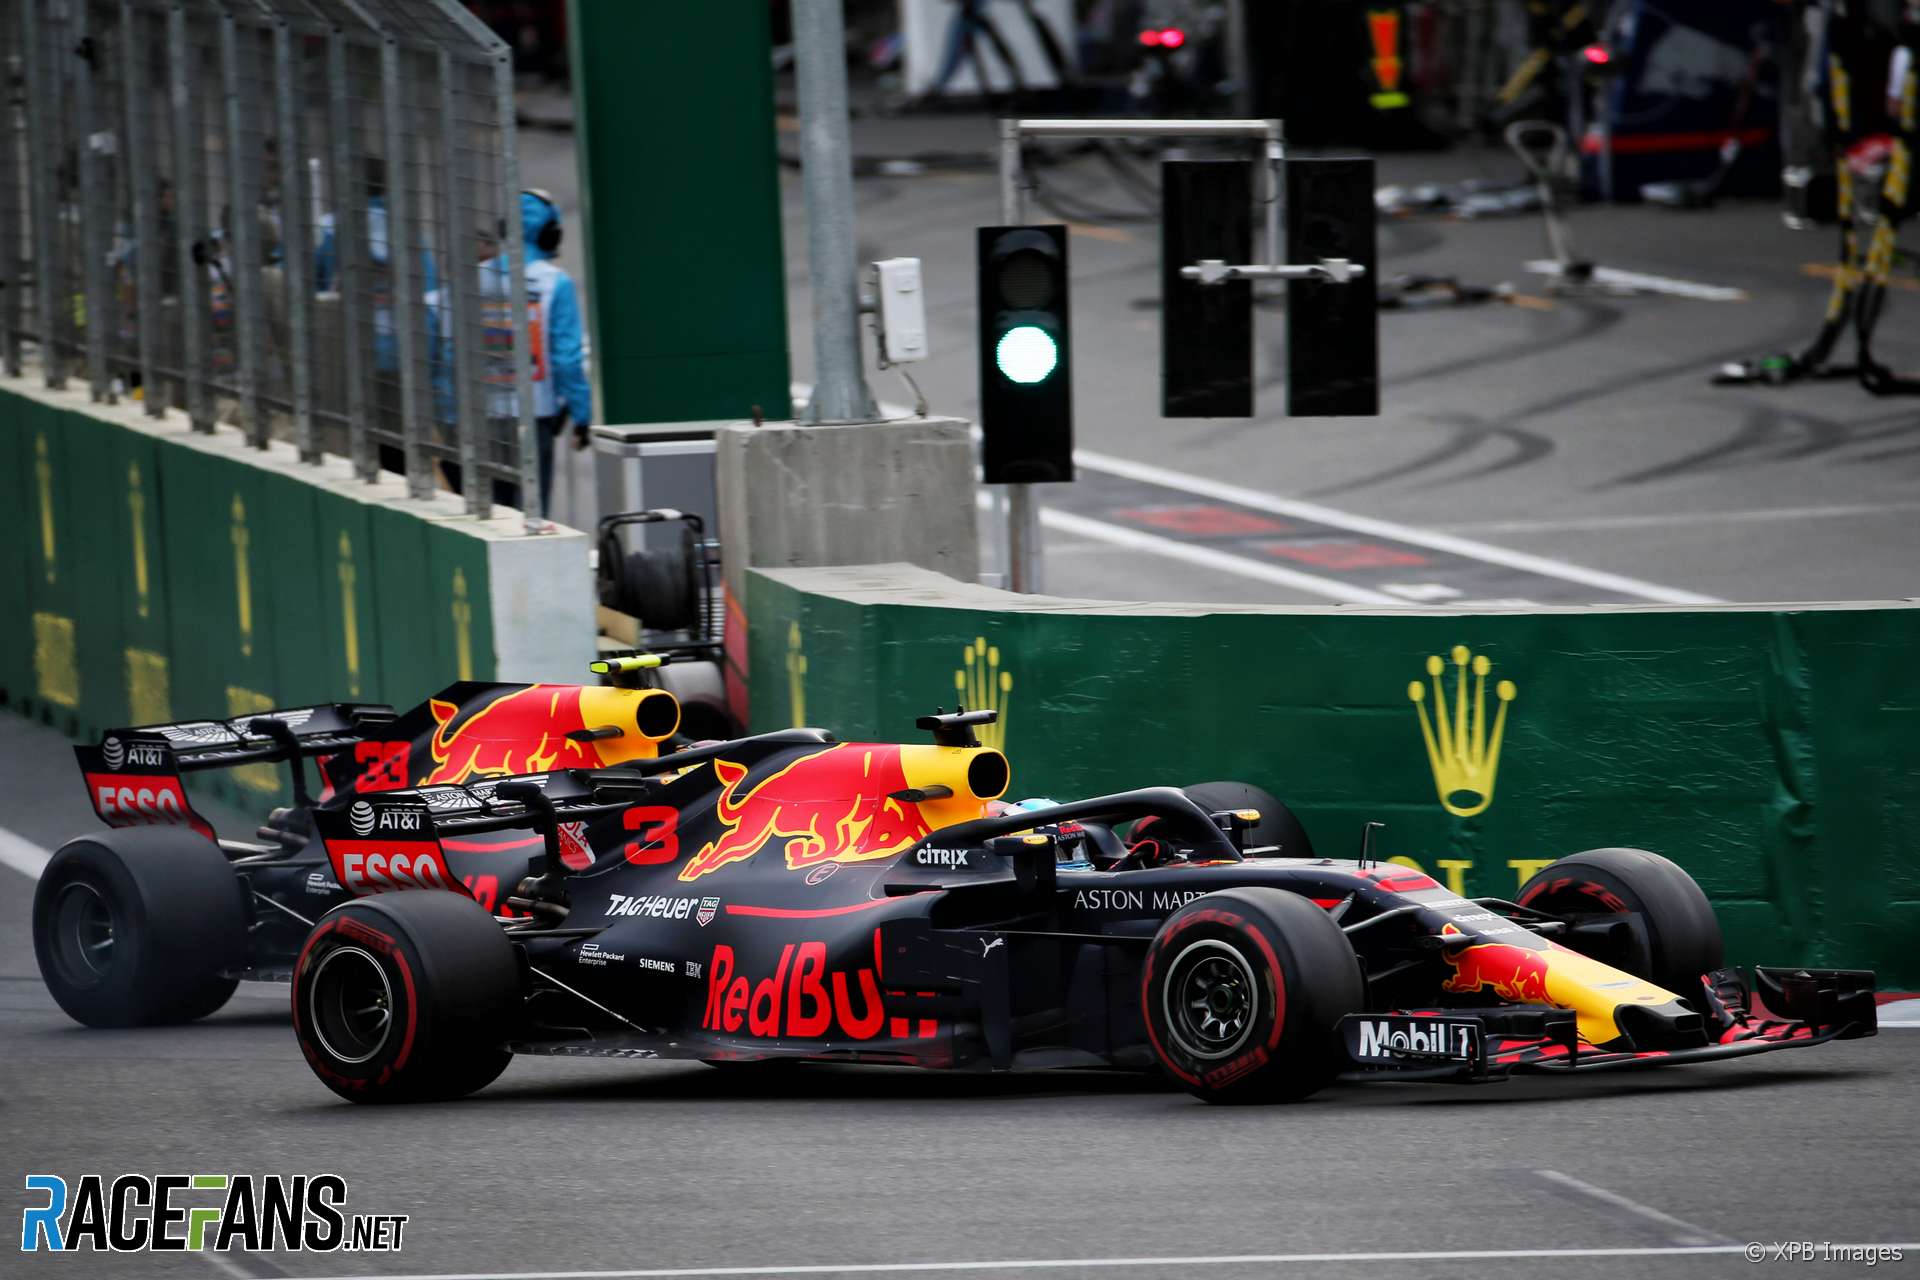 Daniel Ricciardo, Max Verstappen, Red Bull, Baku City Circuit, 2018